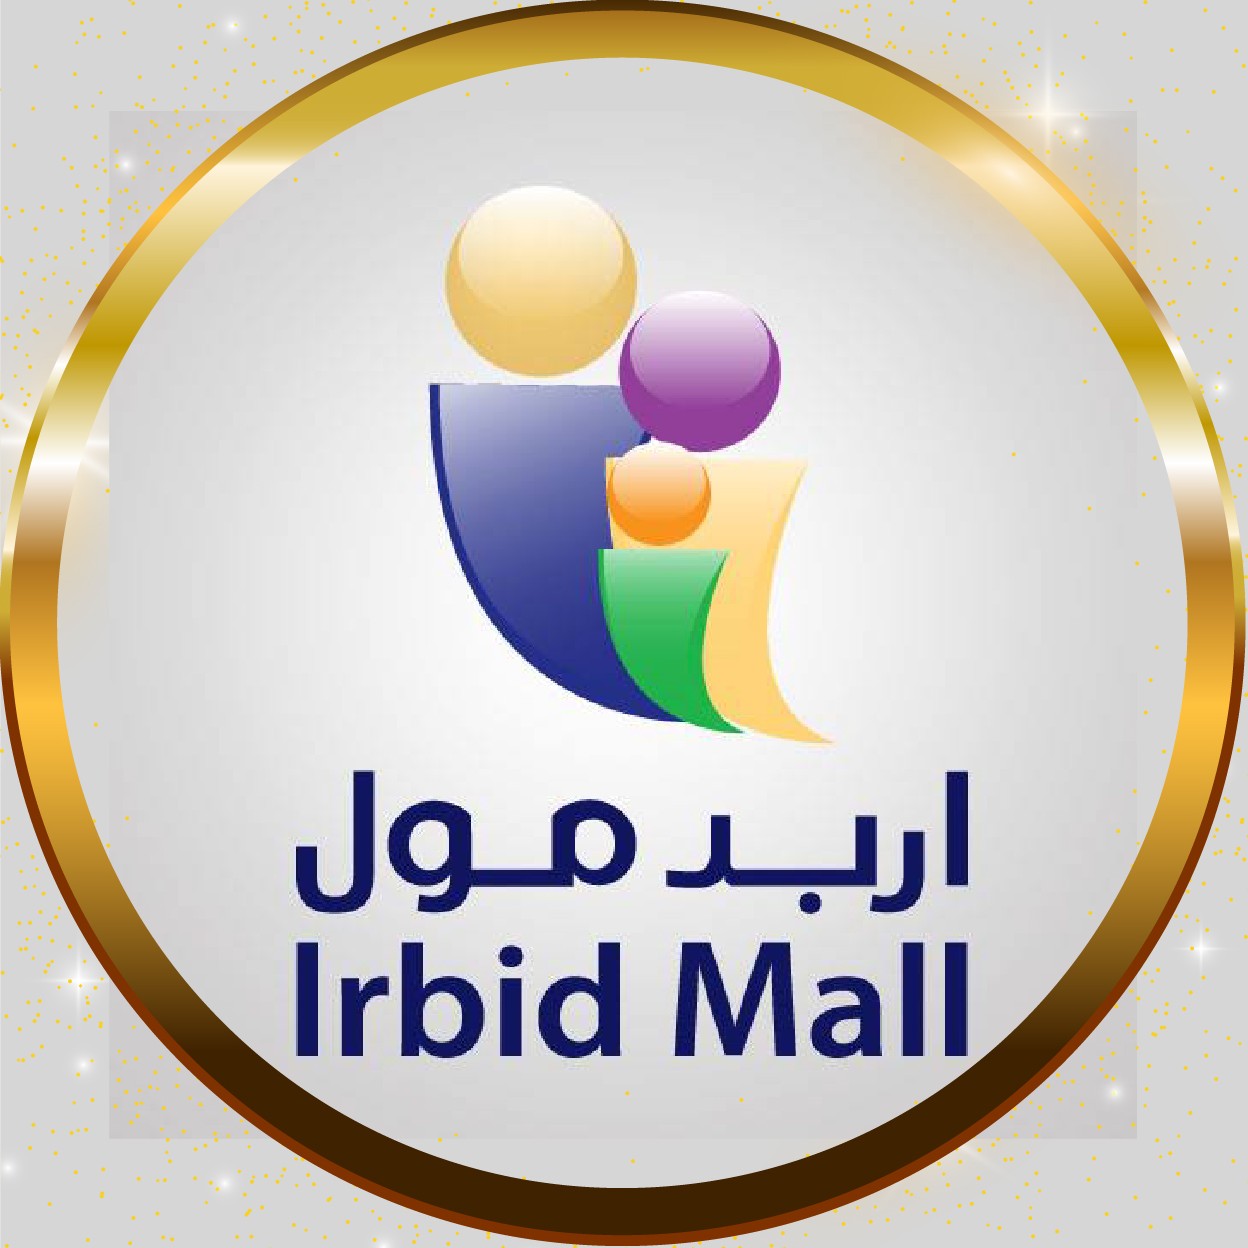 Irbid mall grand